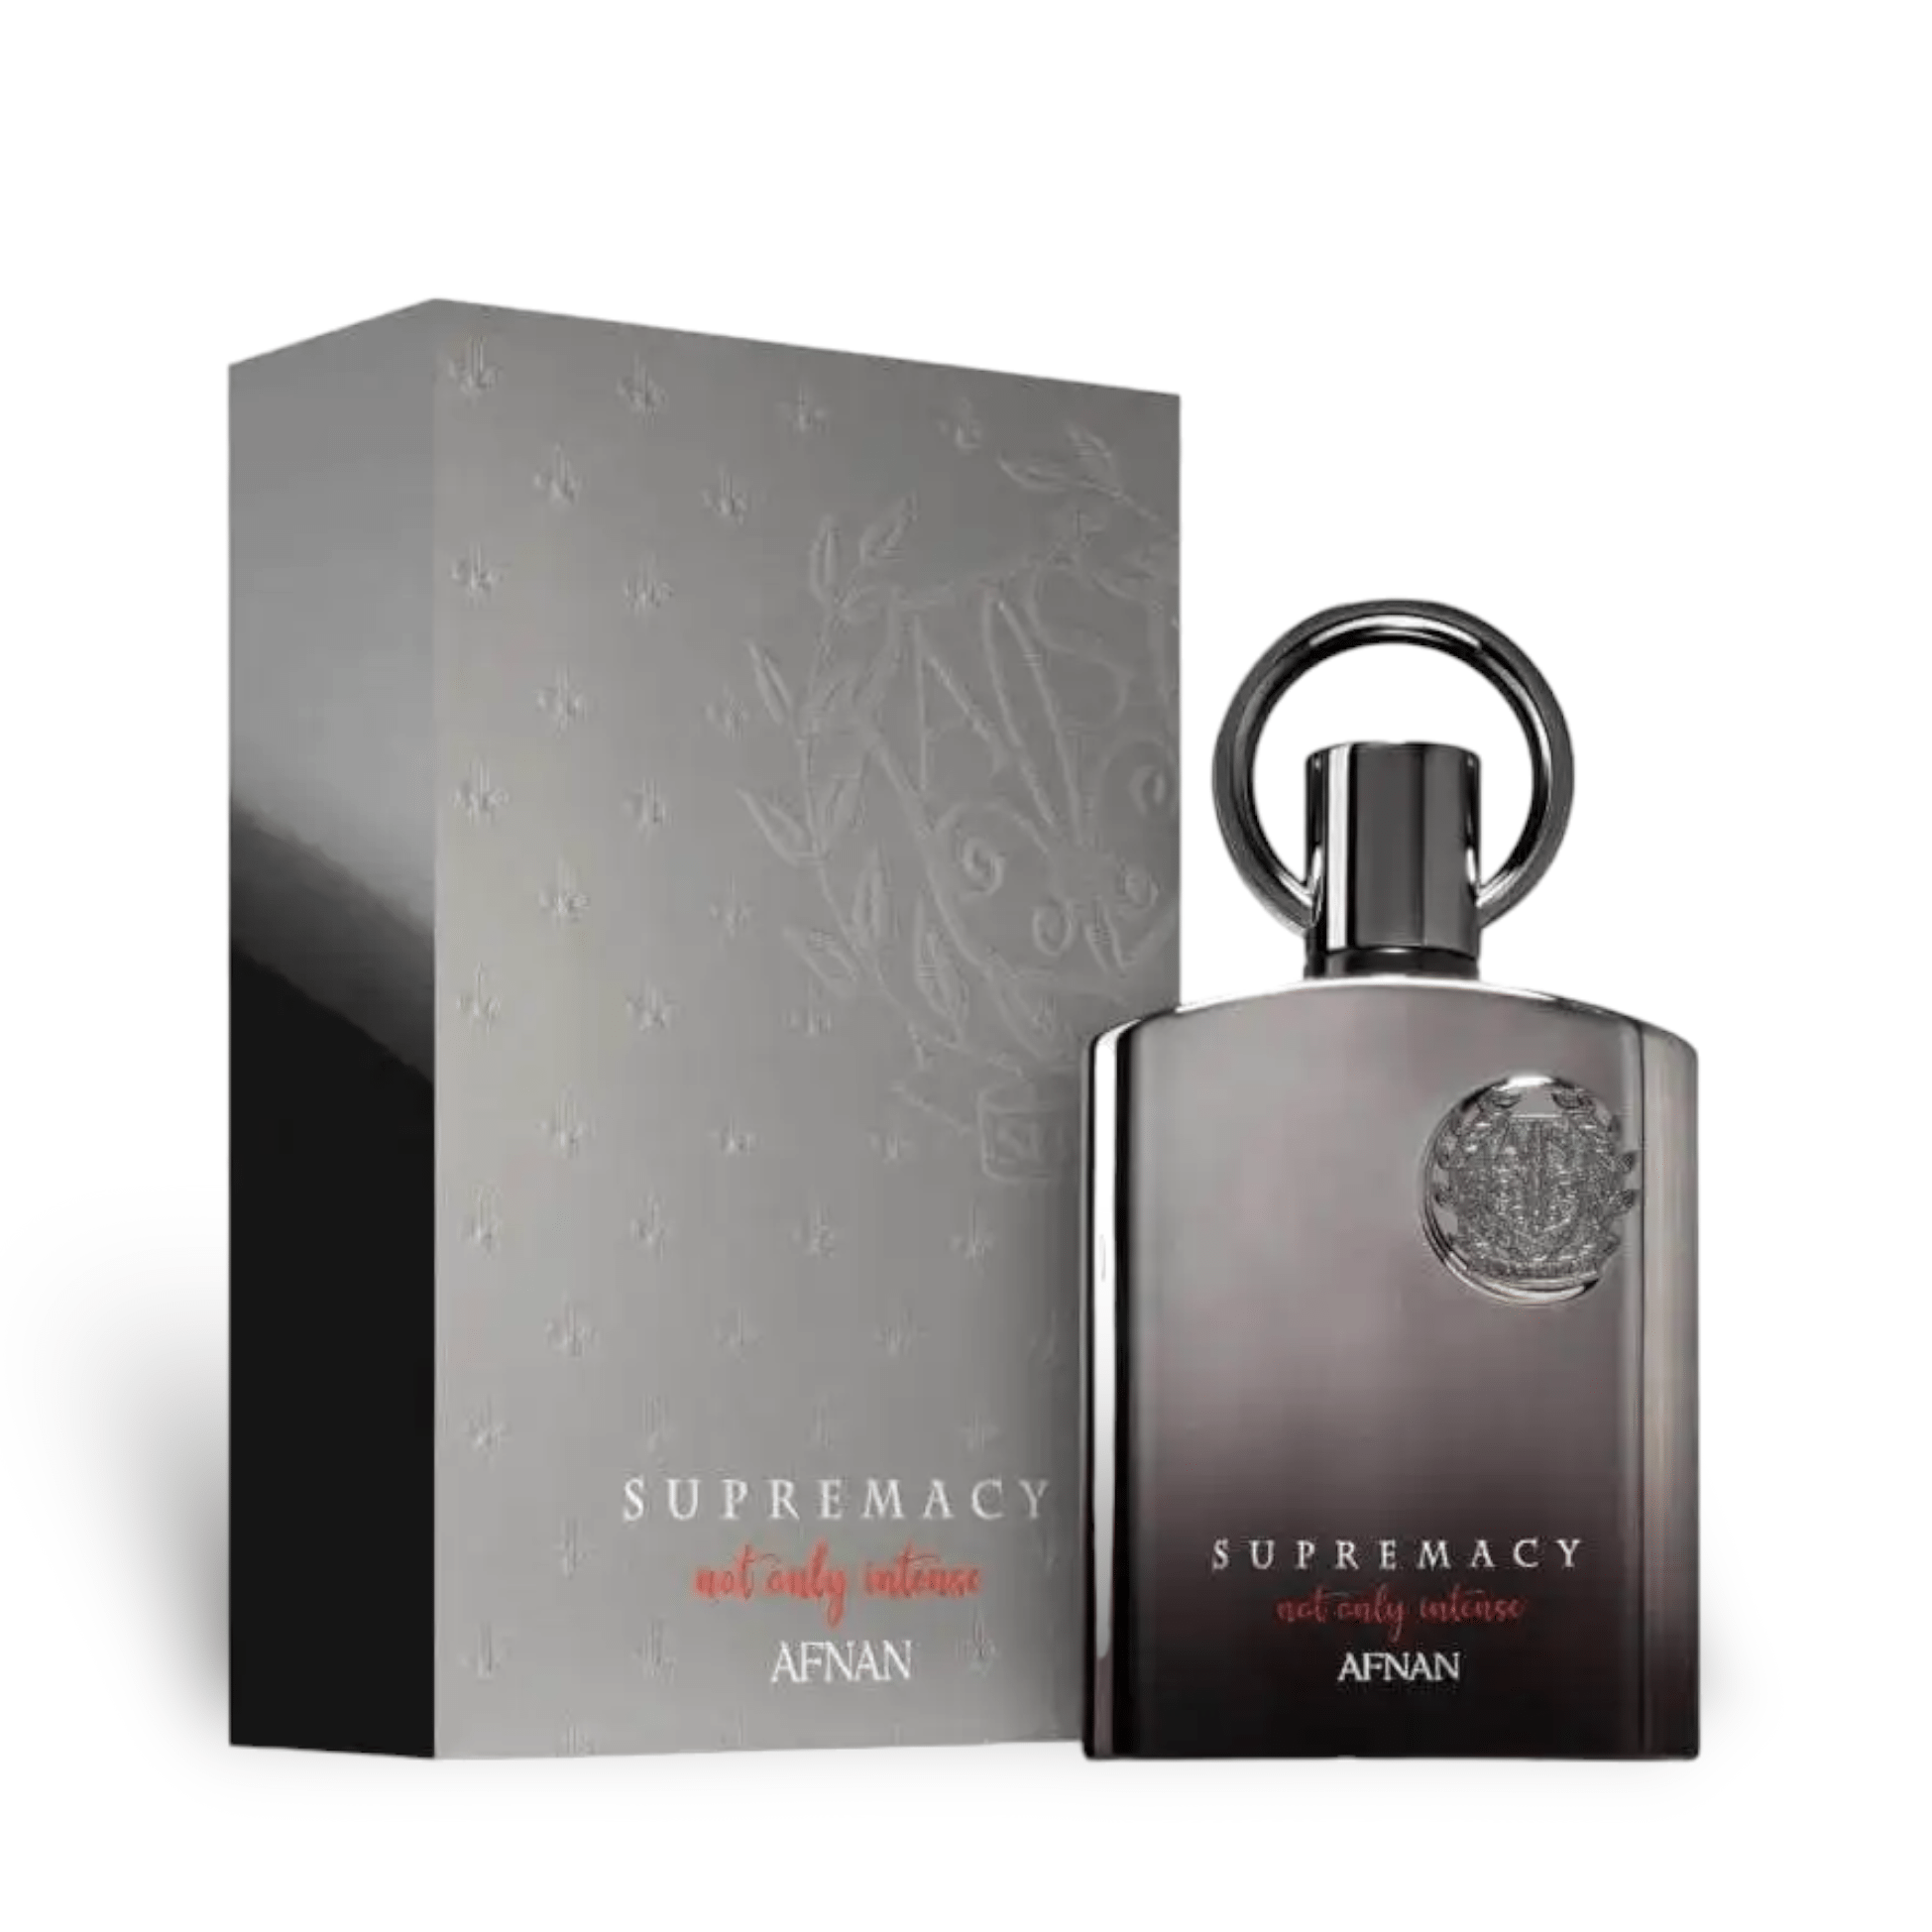 Supremacy Not Only Intense Perfume / Extrait De Parfum 100Ml By Afnan